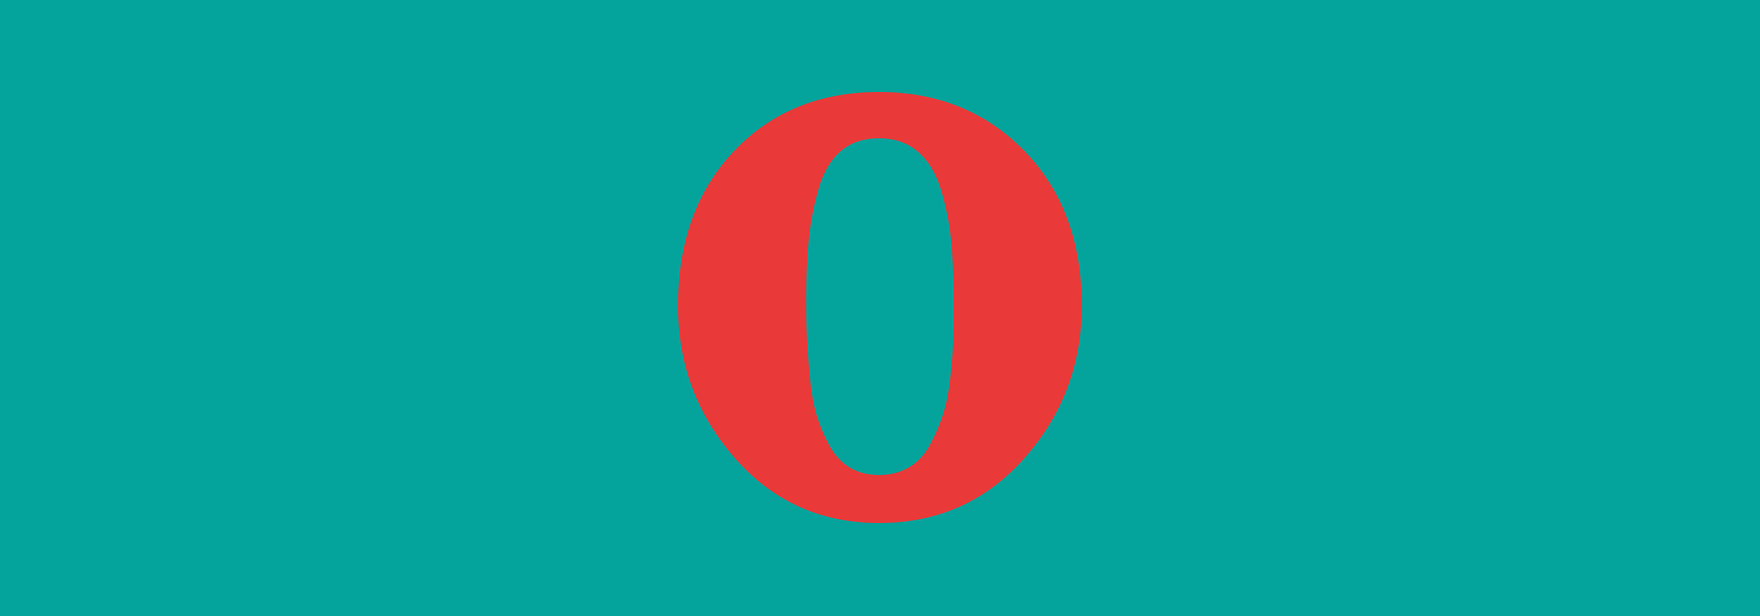 Opera показала новый браузер — One